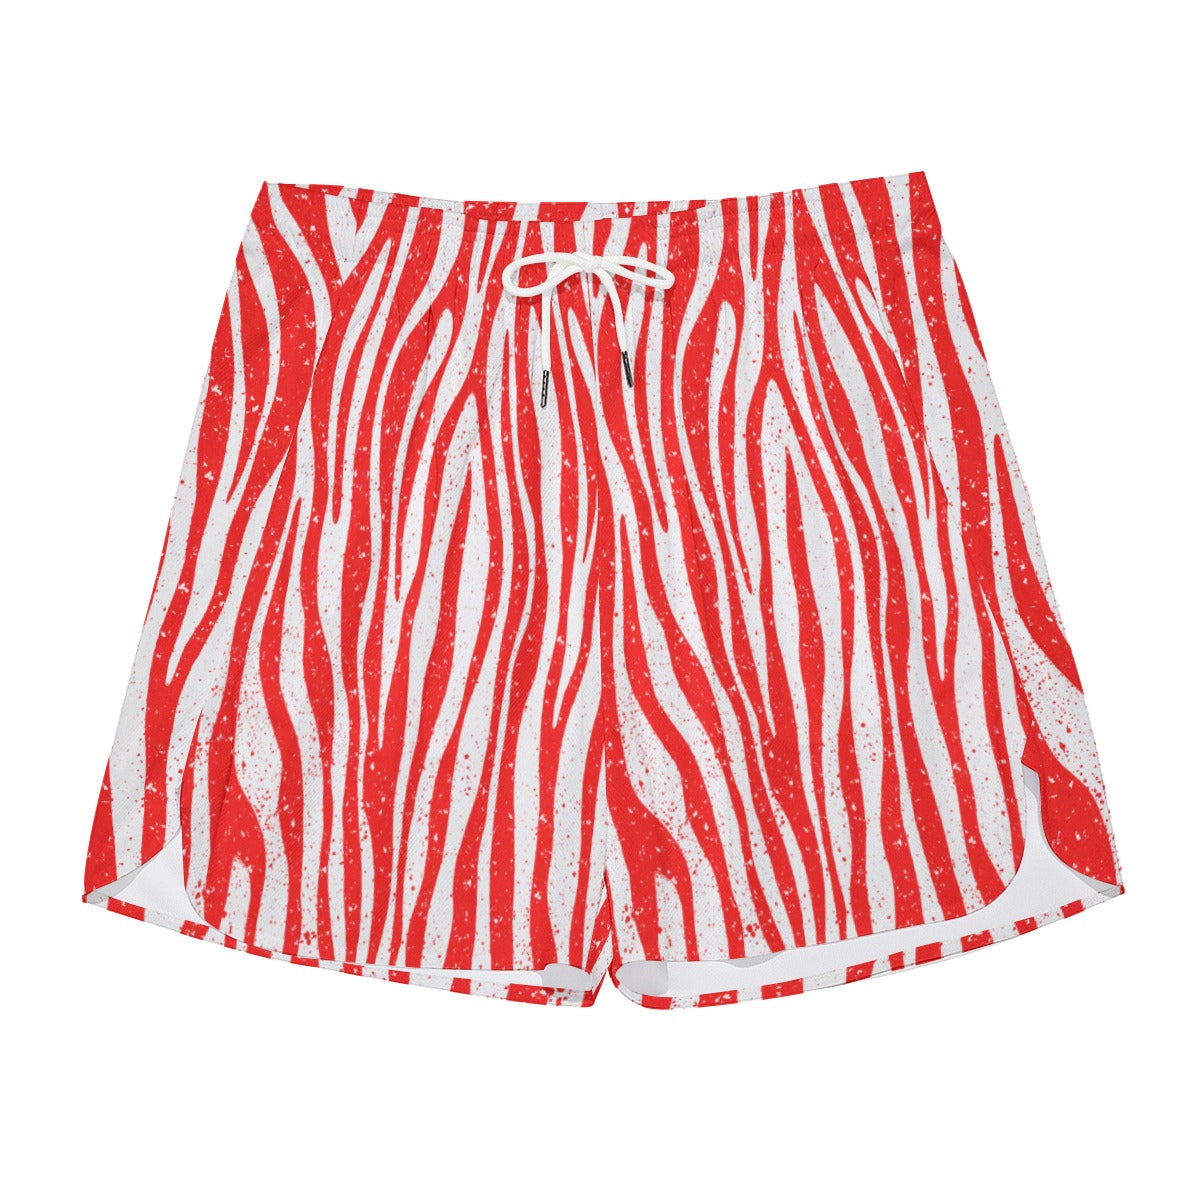 Peppermint Zebra Dudes Drawstring Chill Gym Shorts